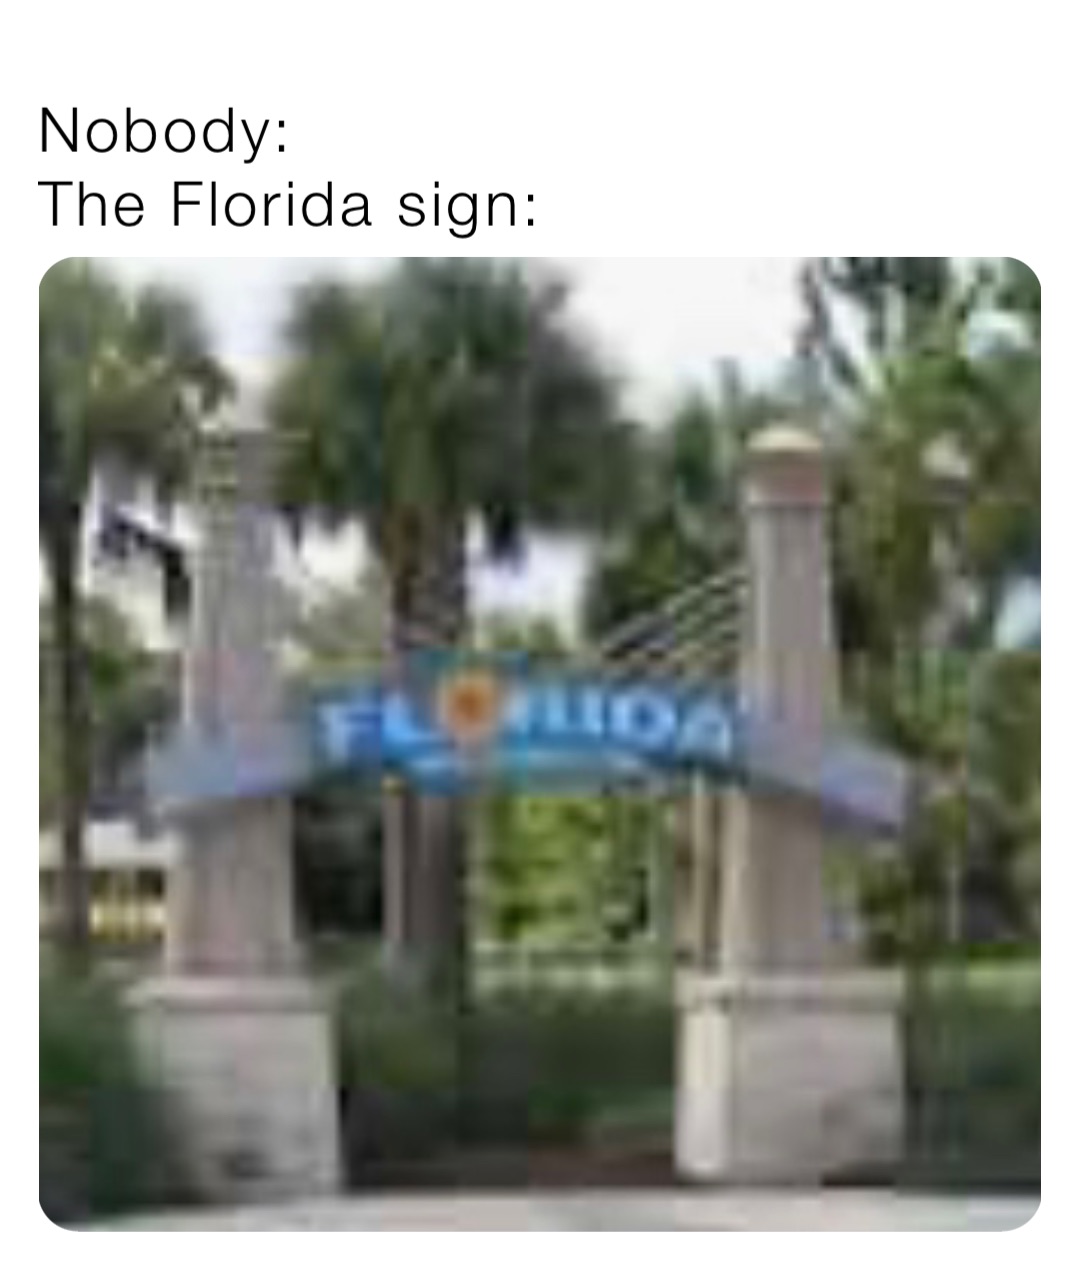 Nobody:
The Florida sign: